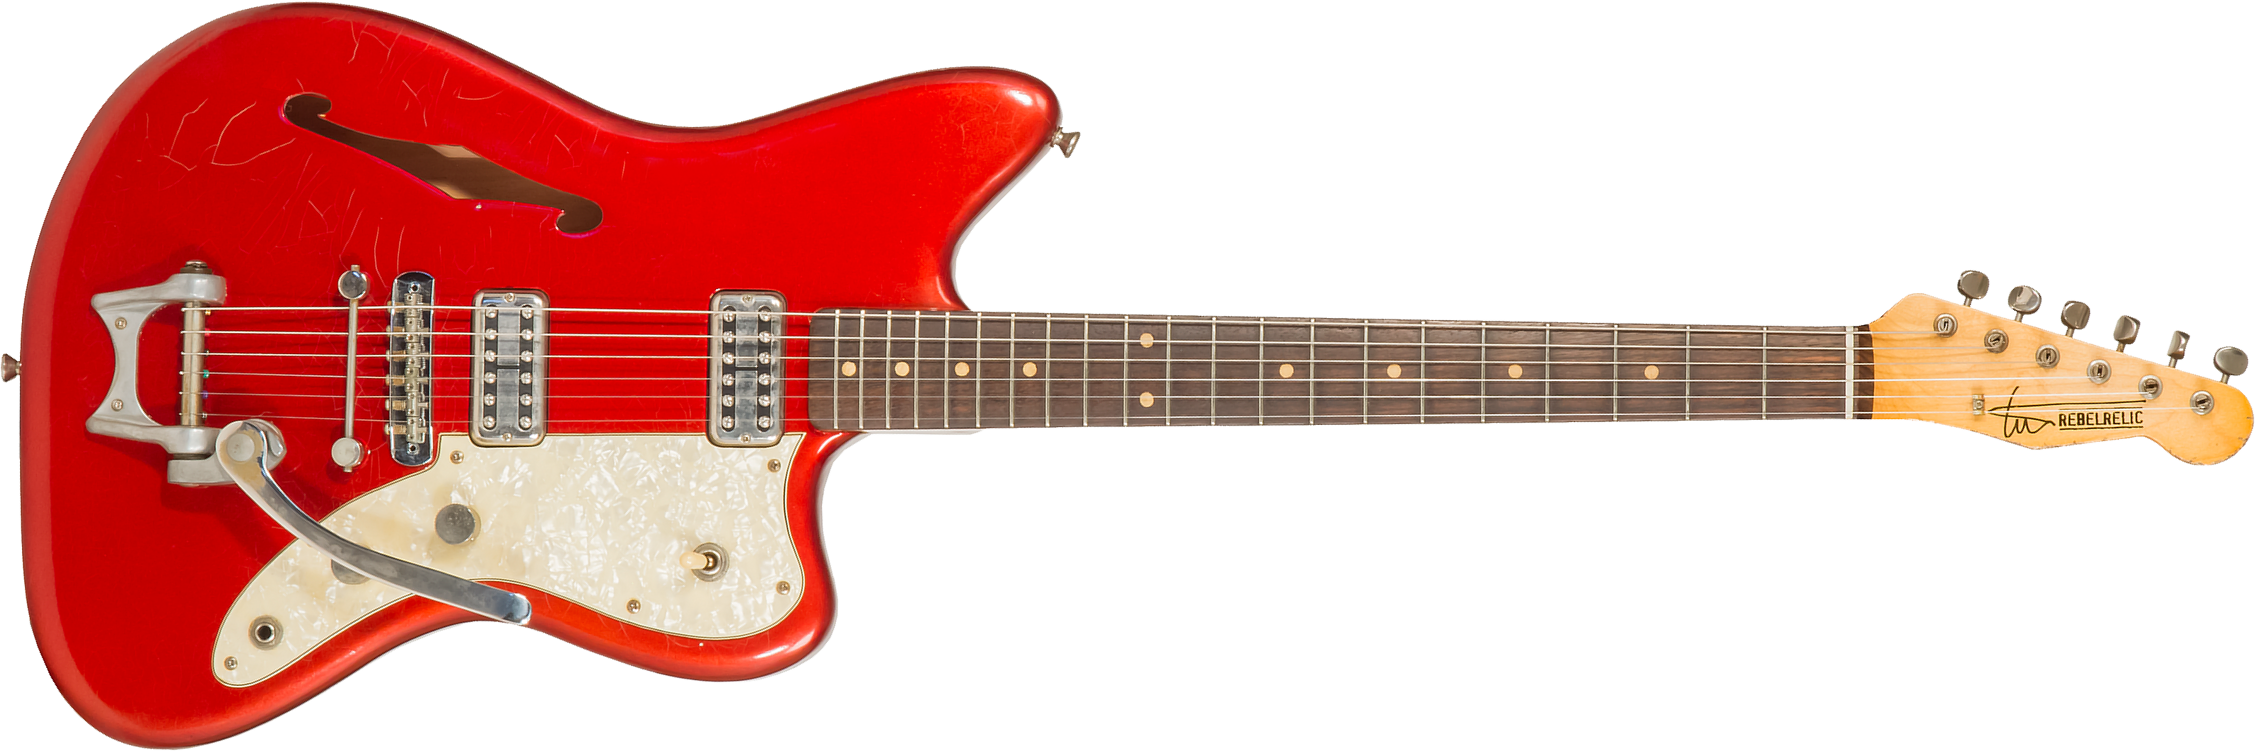 Rebelrelic Wrangler 2h Trem Rw #62175 - Light Aged Candy Apple Red - Guitarra eléctrica semi caja - Main picture